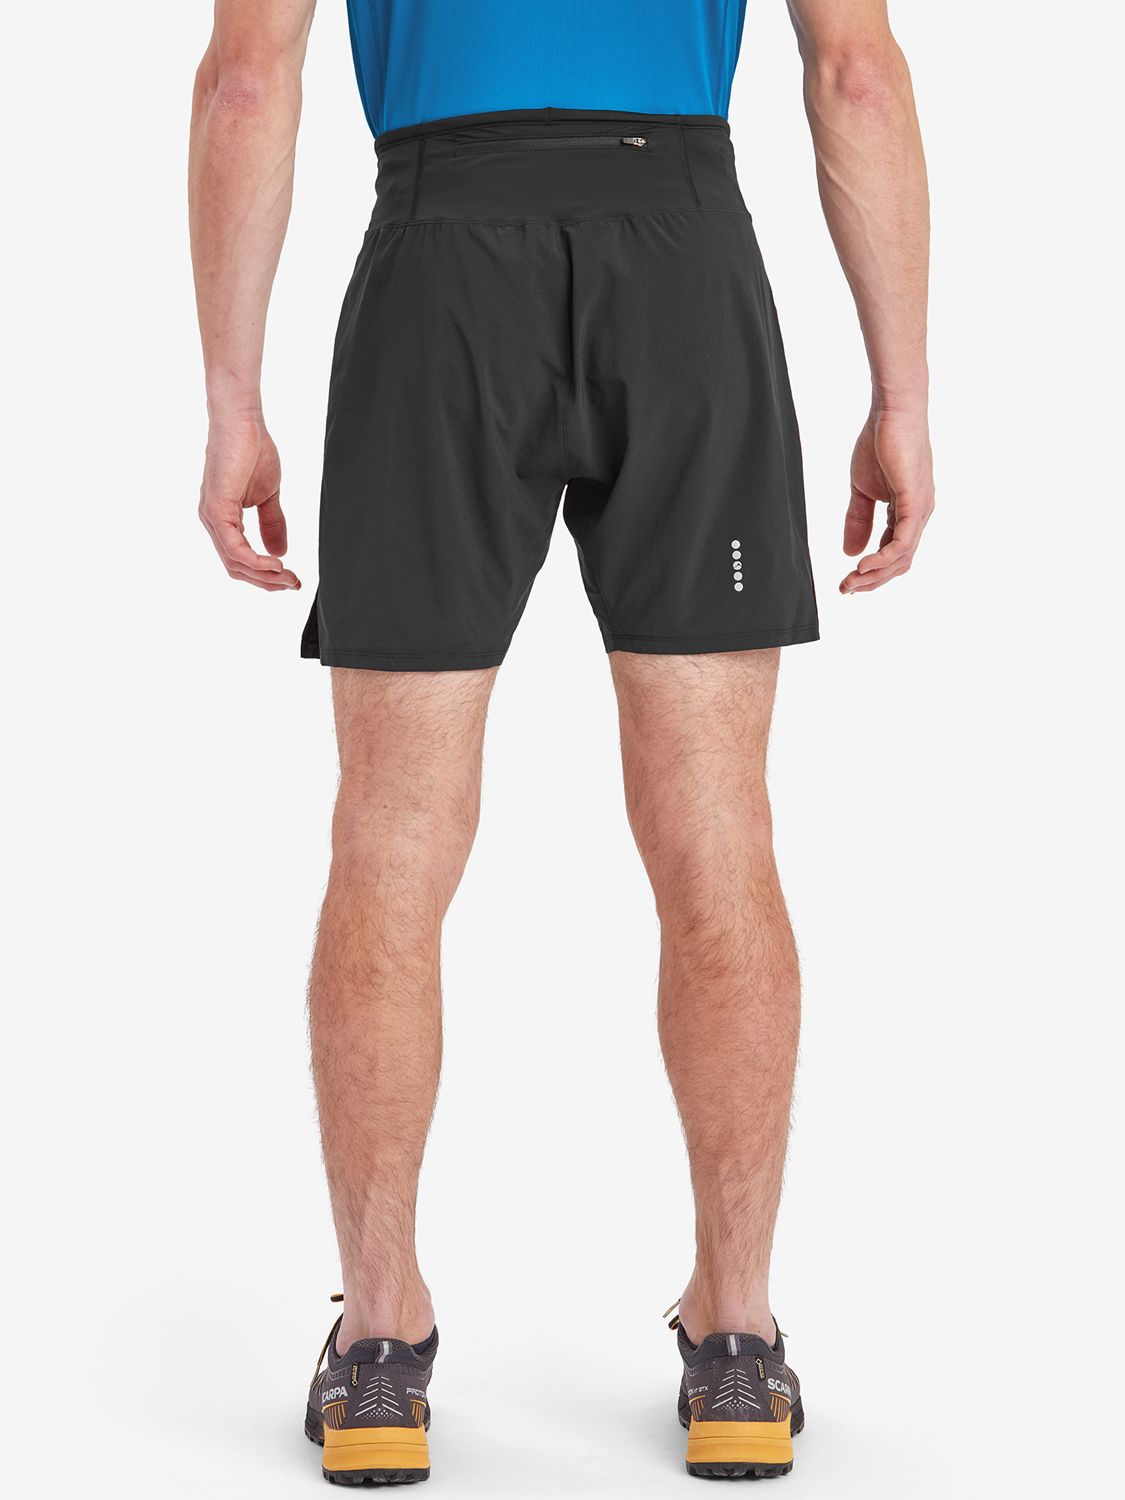 Buy Montane Slipstream 7" Shorts Online at johnlewis.com